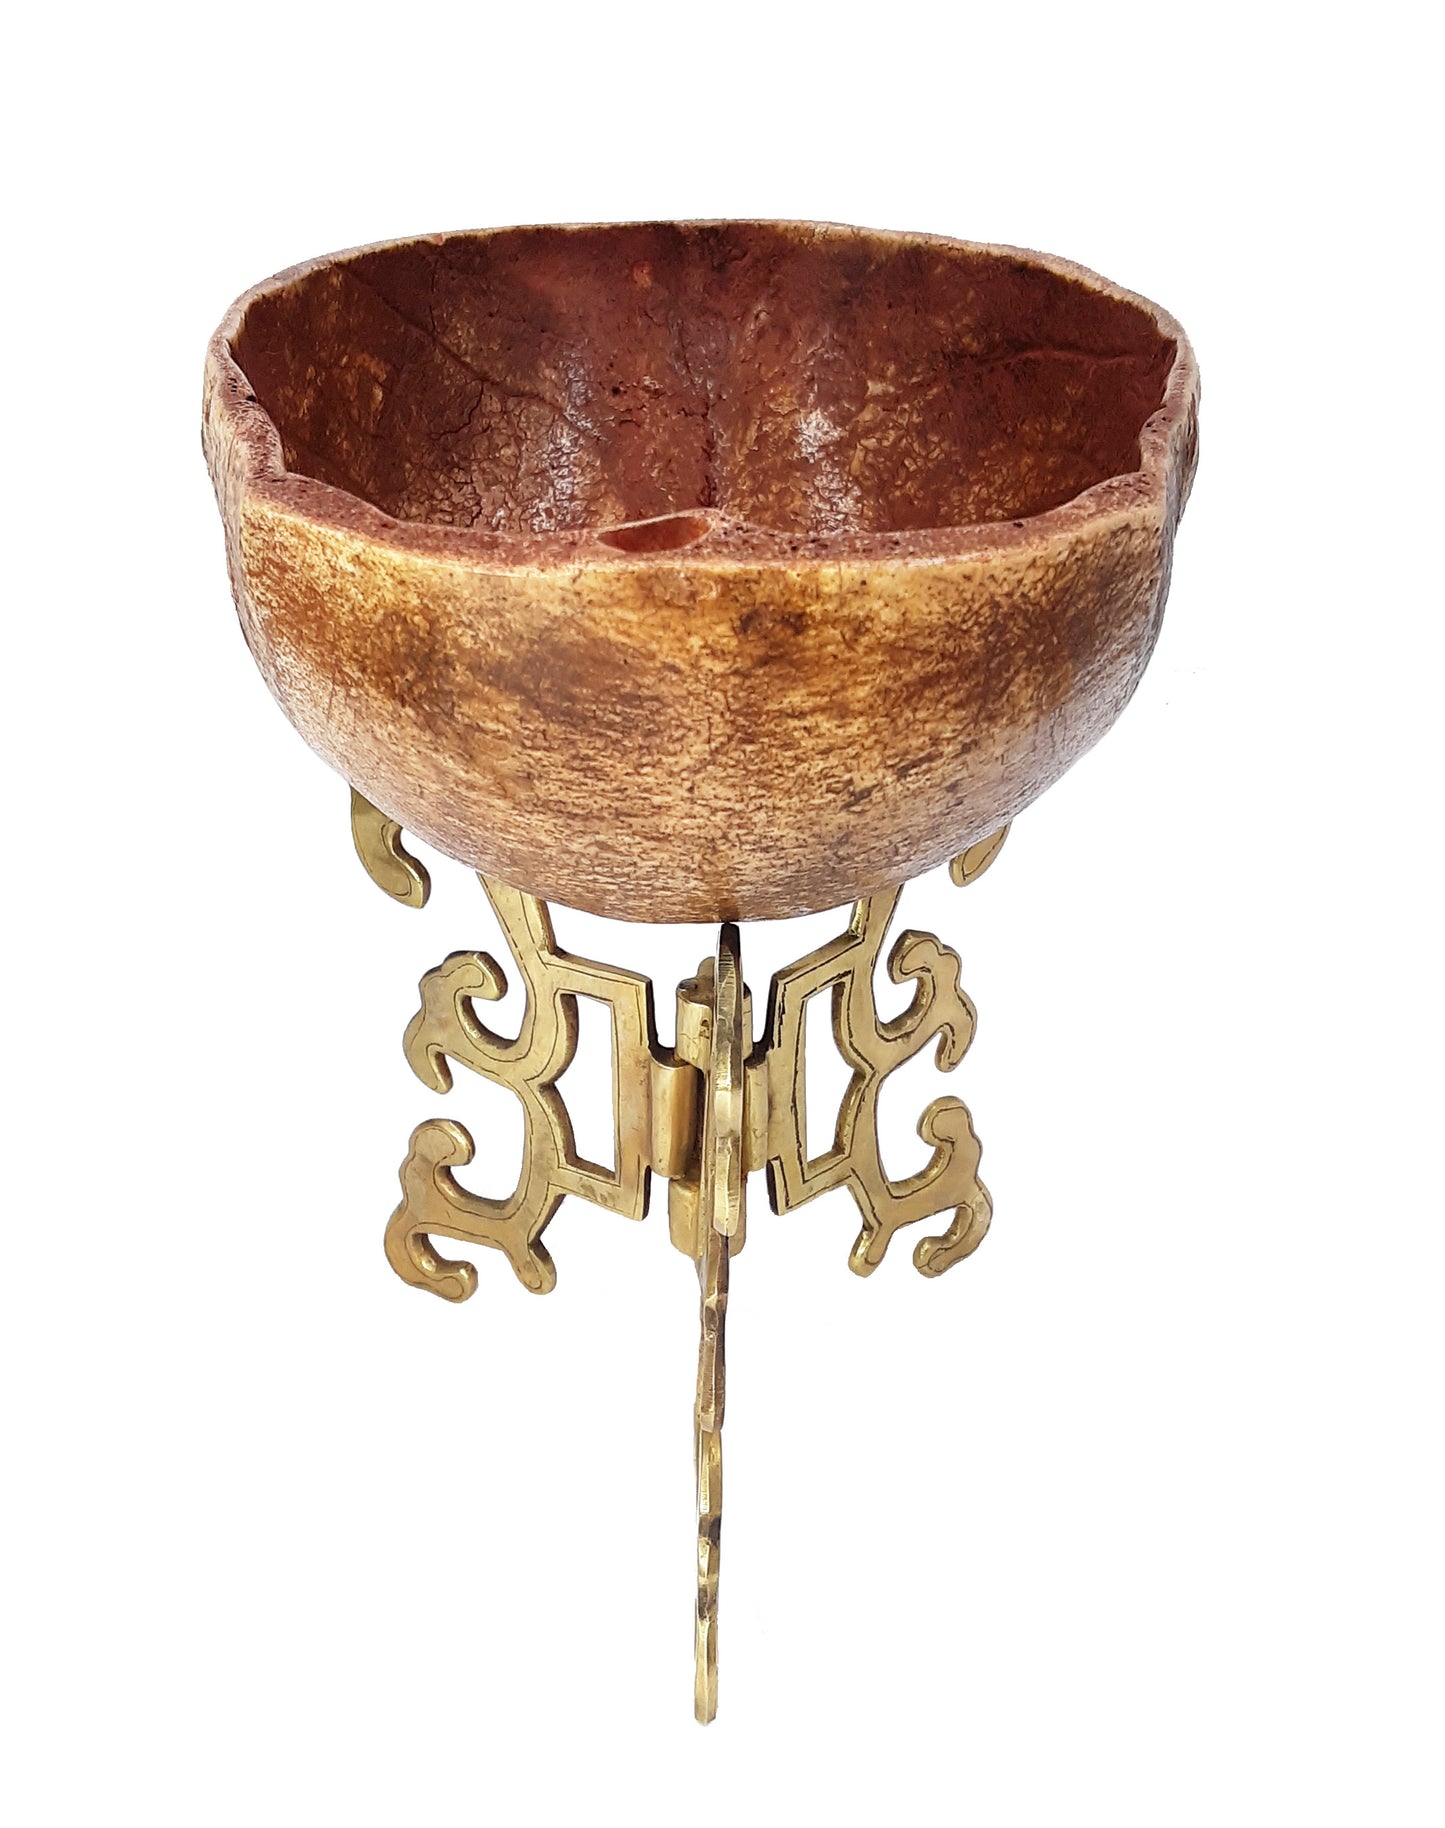 Kapala, Authentic Human Skull Cup